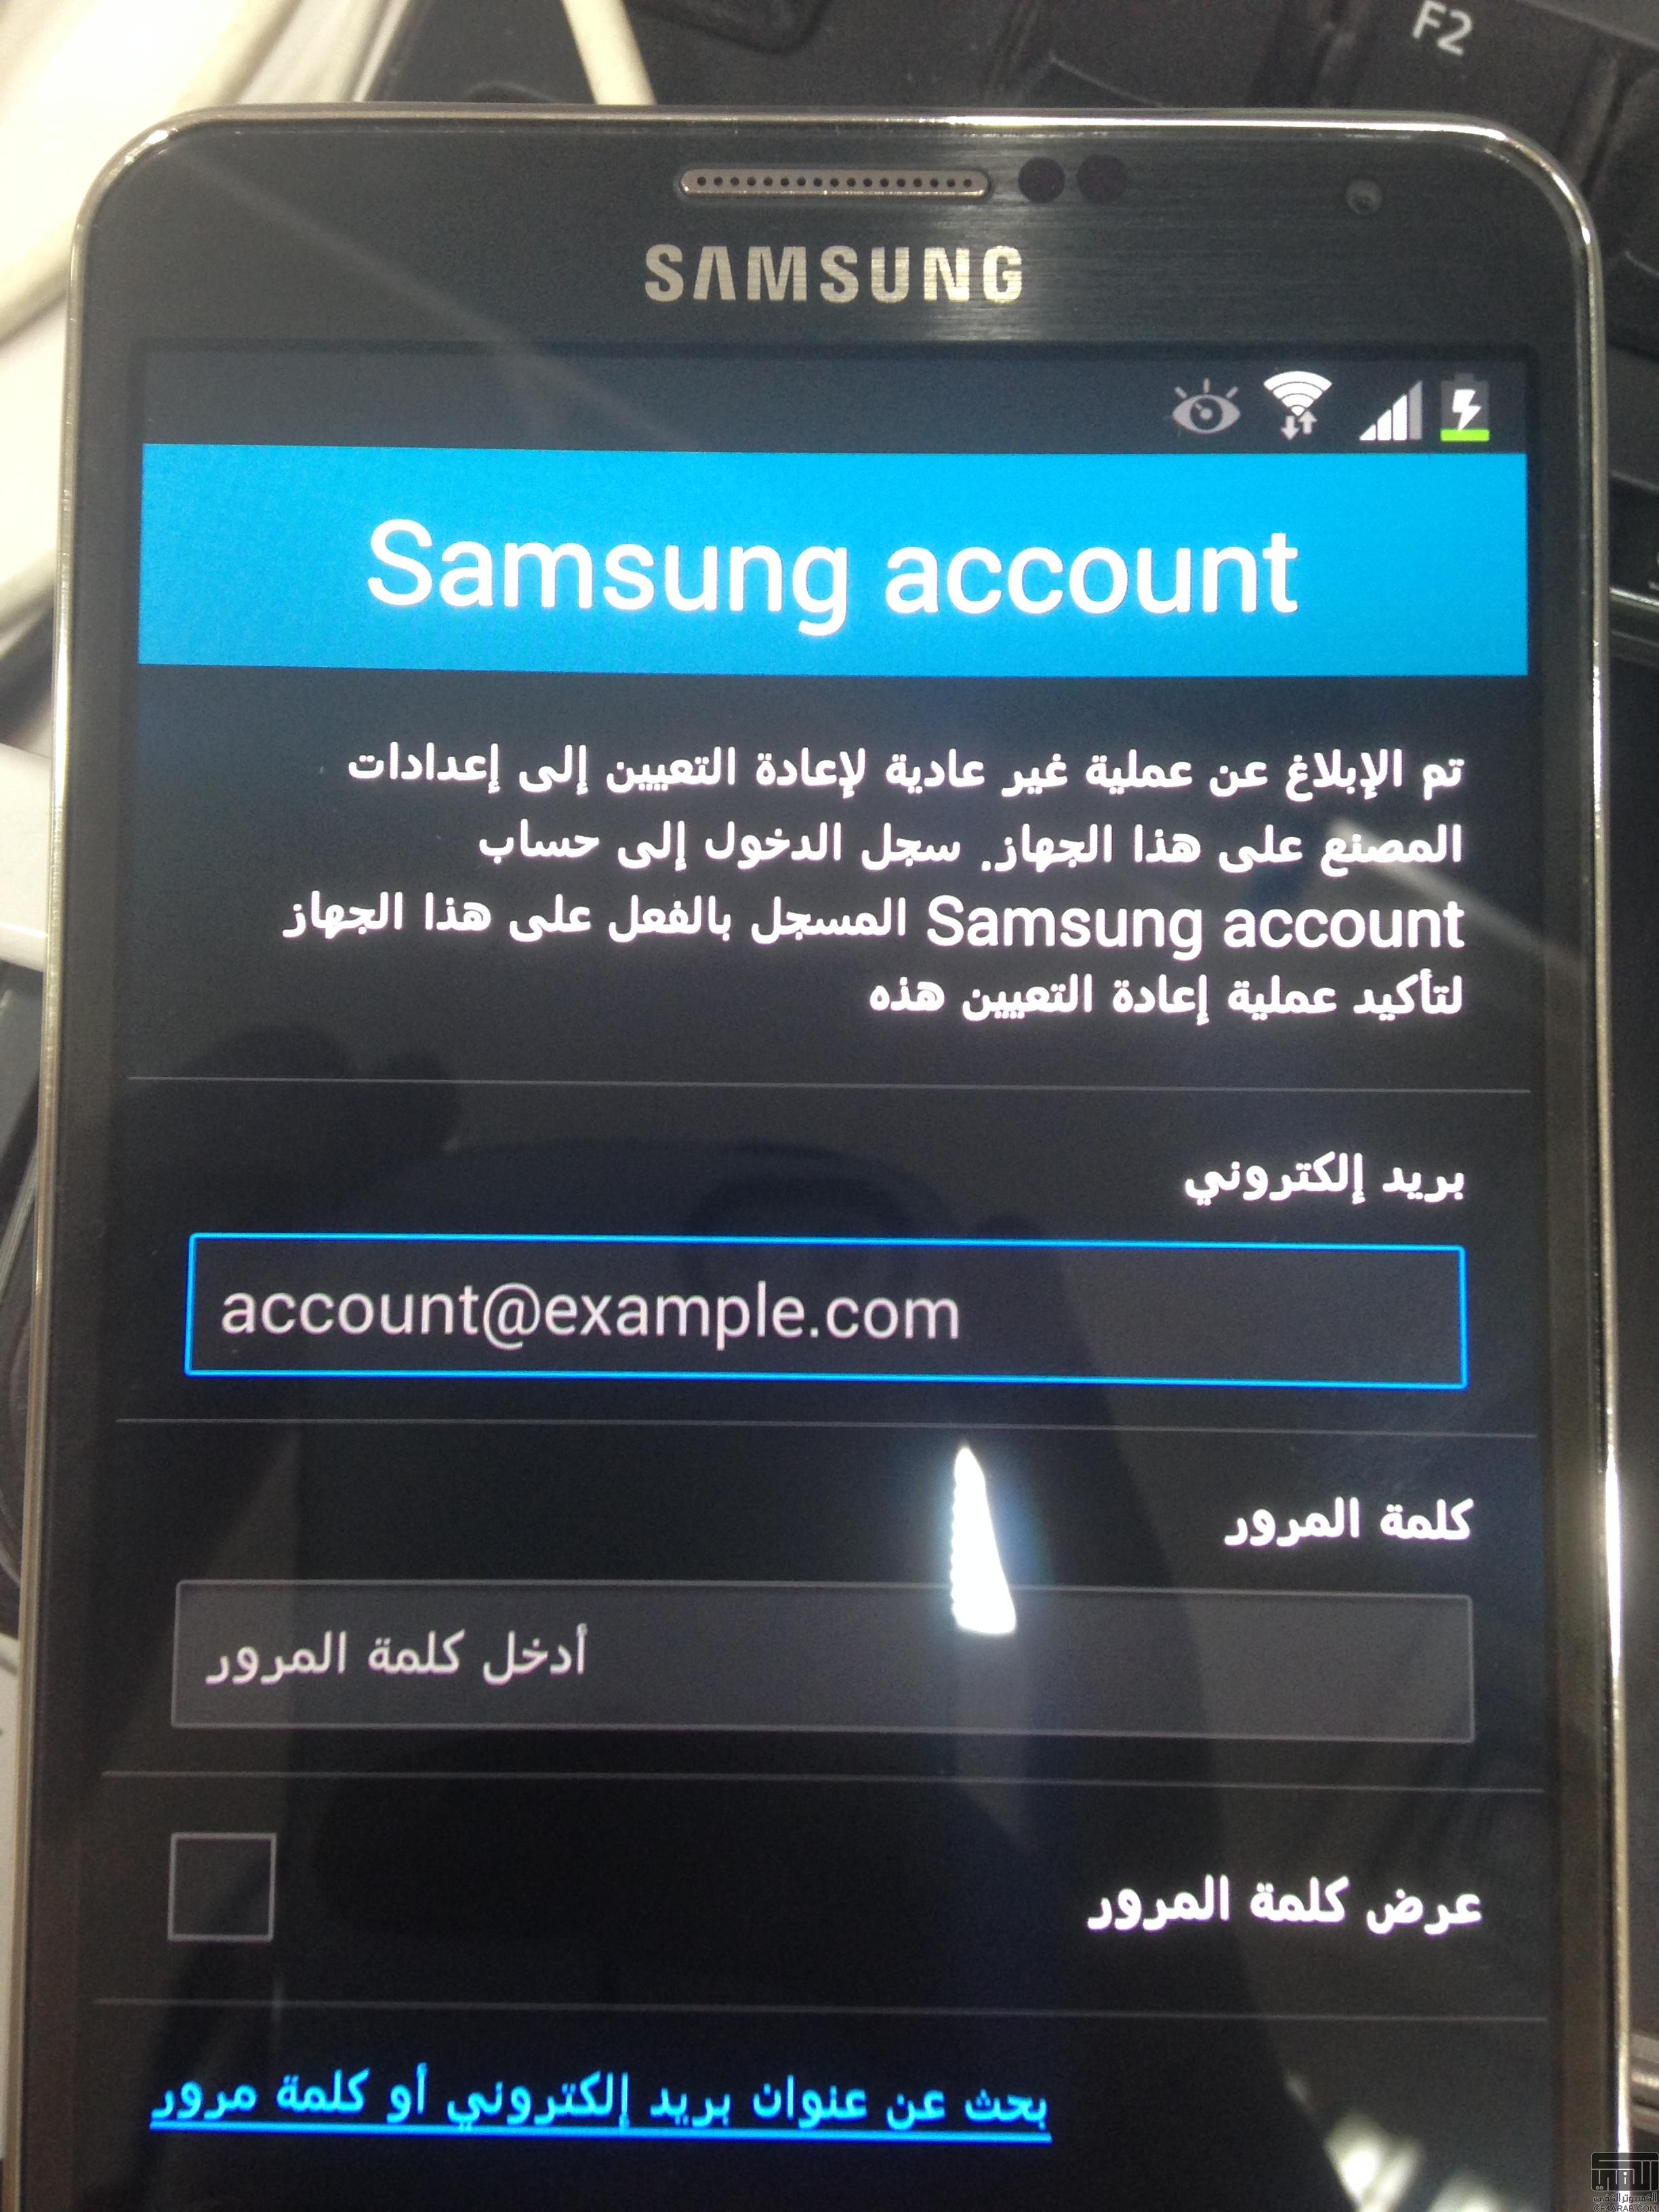 Account Samsung Com Удалить